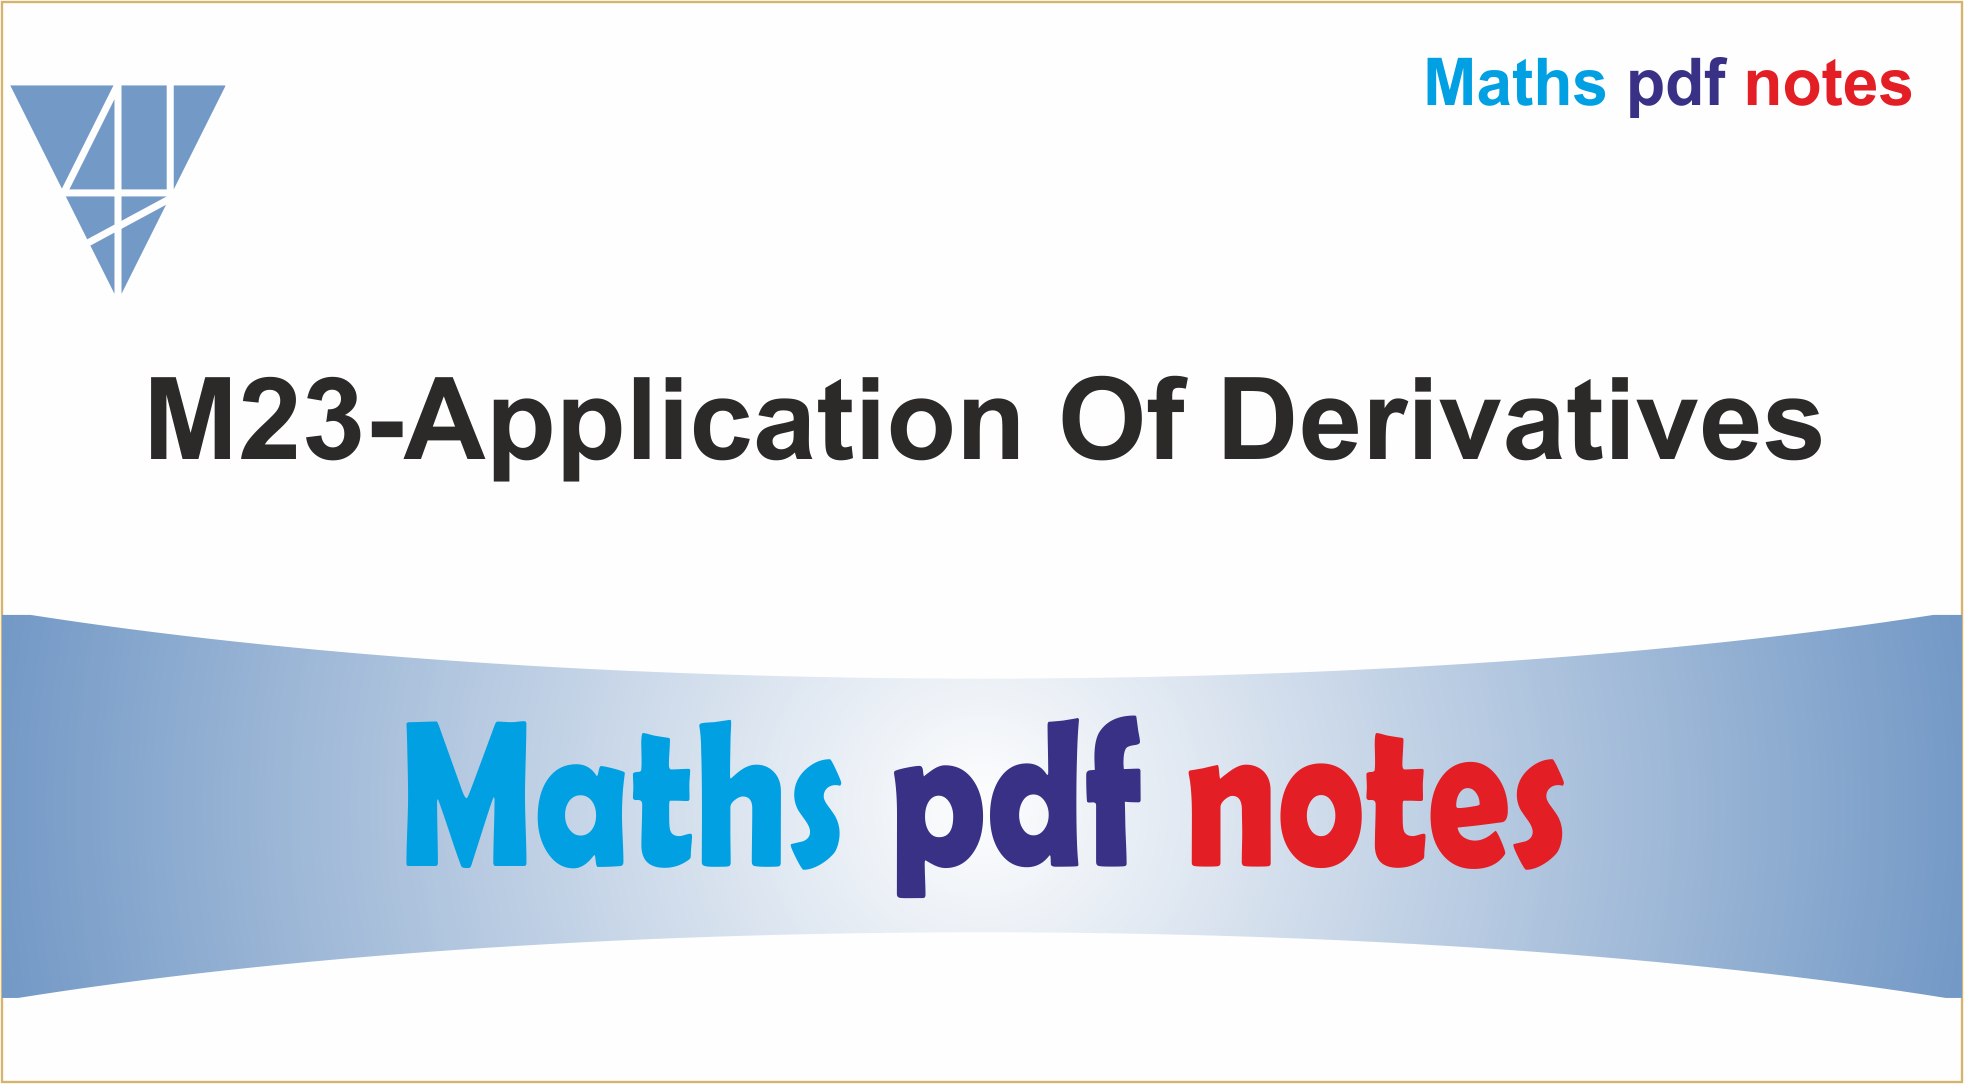 M23-Application of Derivatives